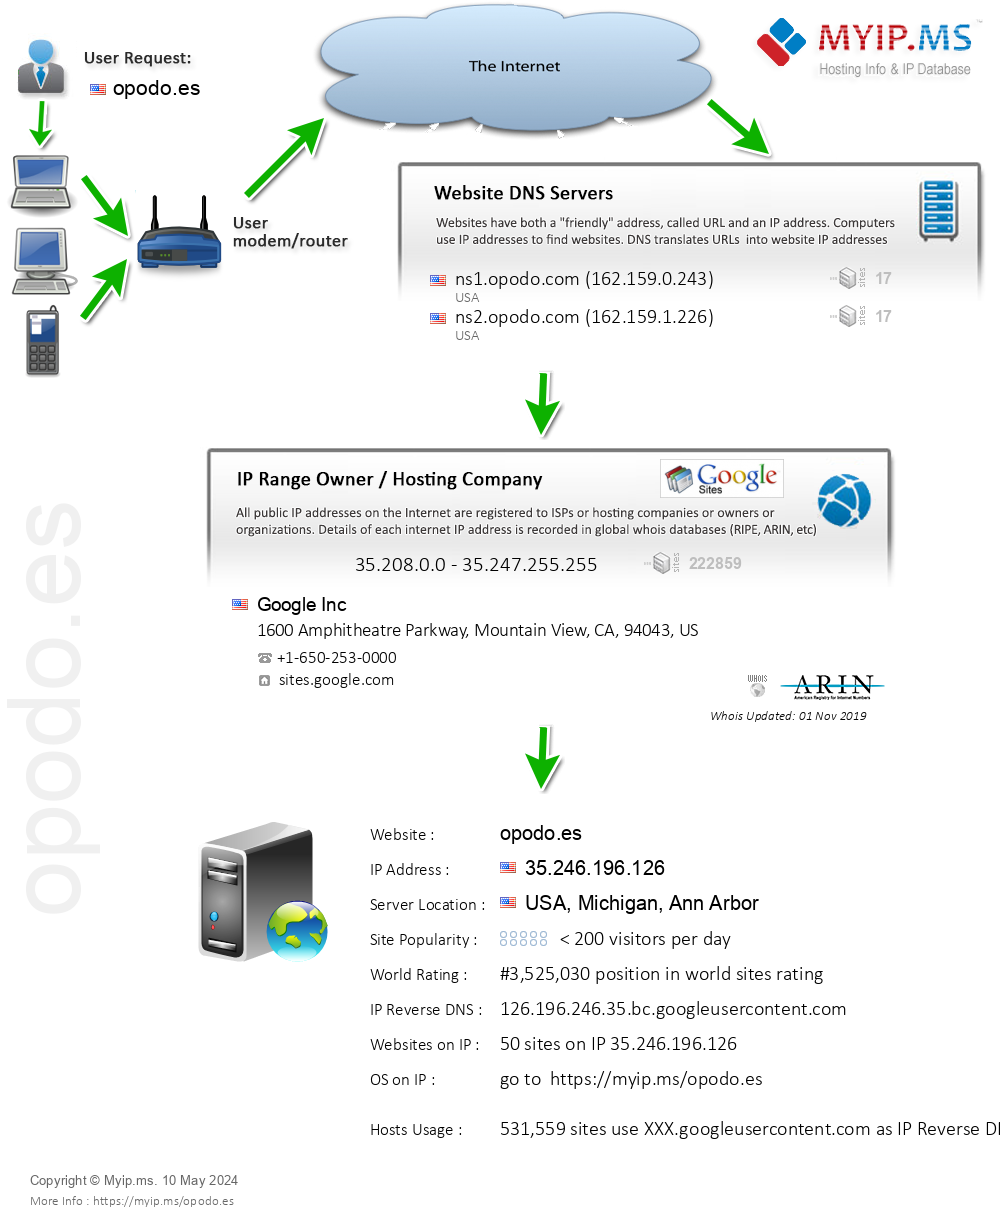 Opodo.es - Website Hosting Visual IP Diagram